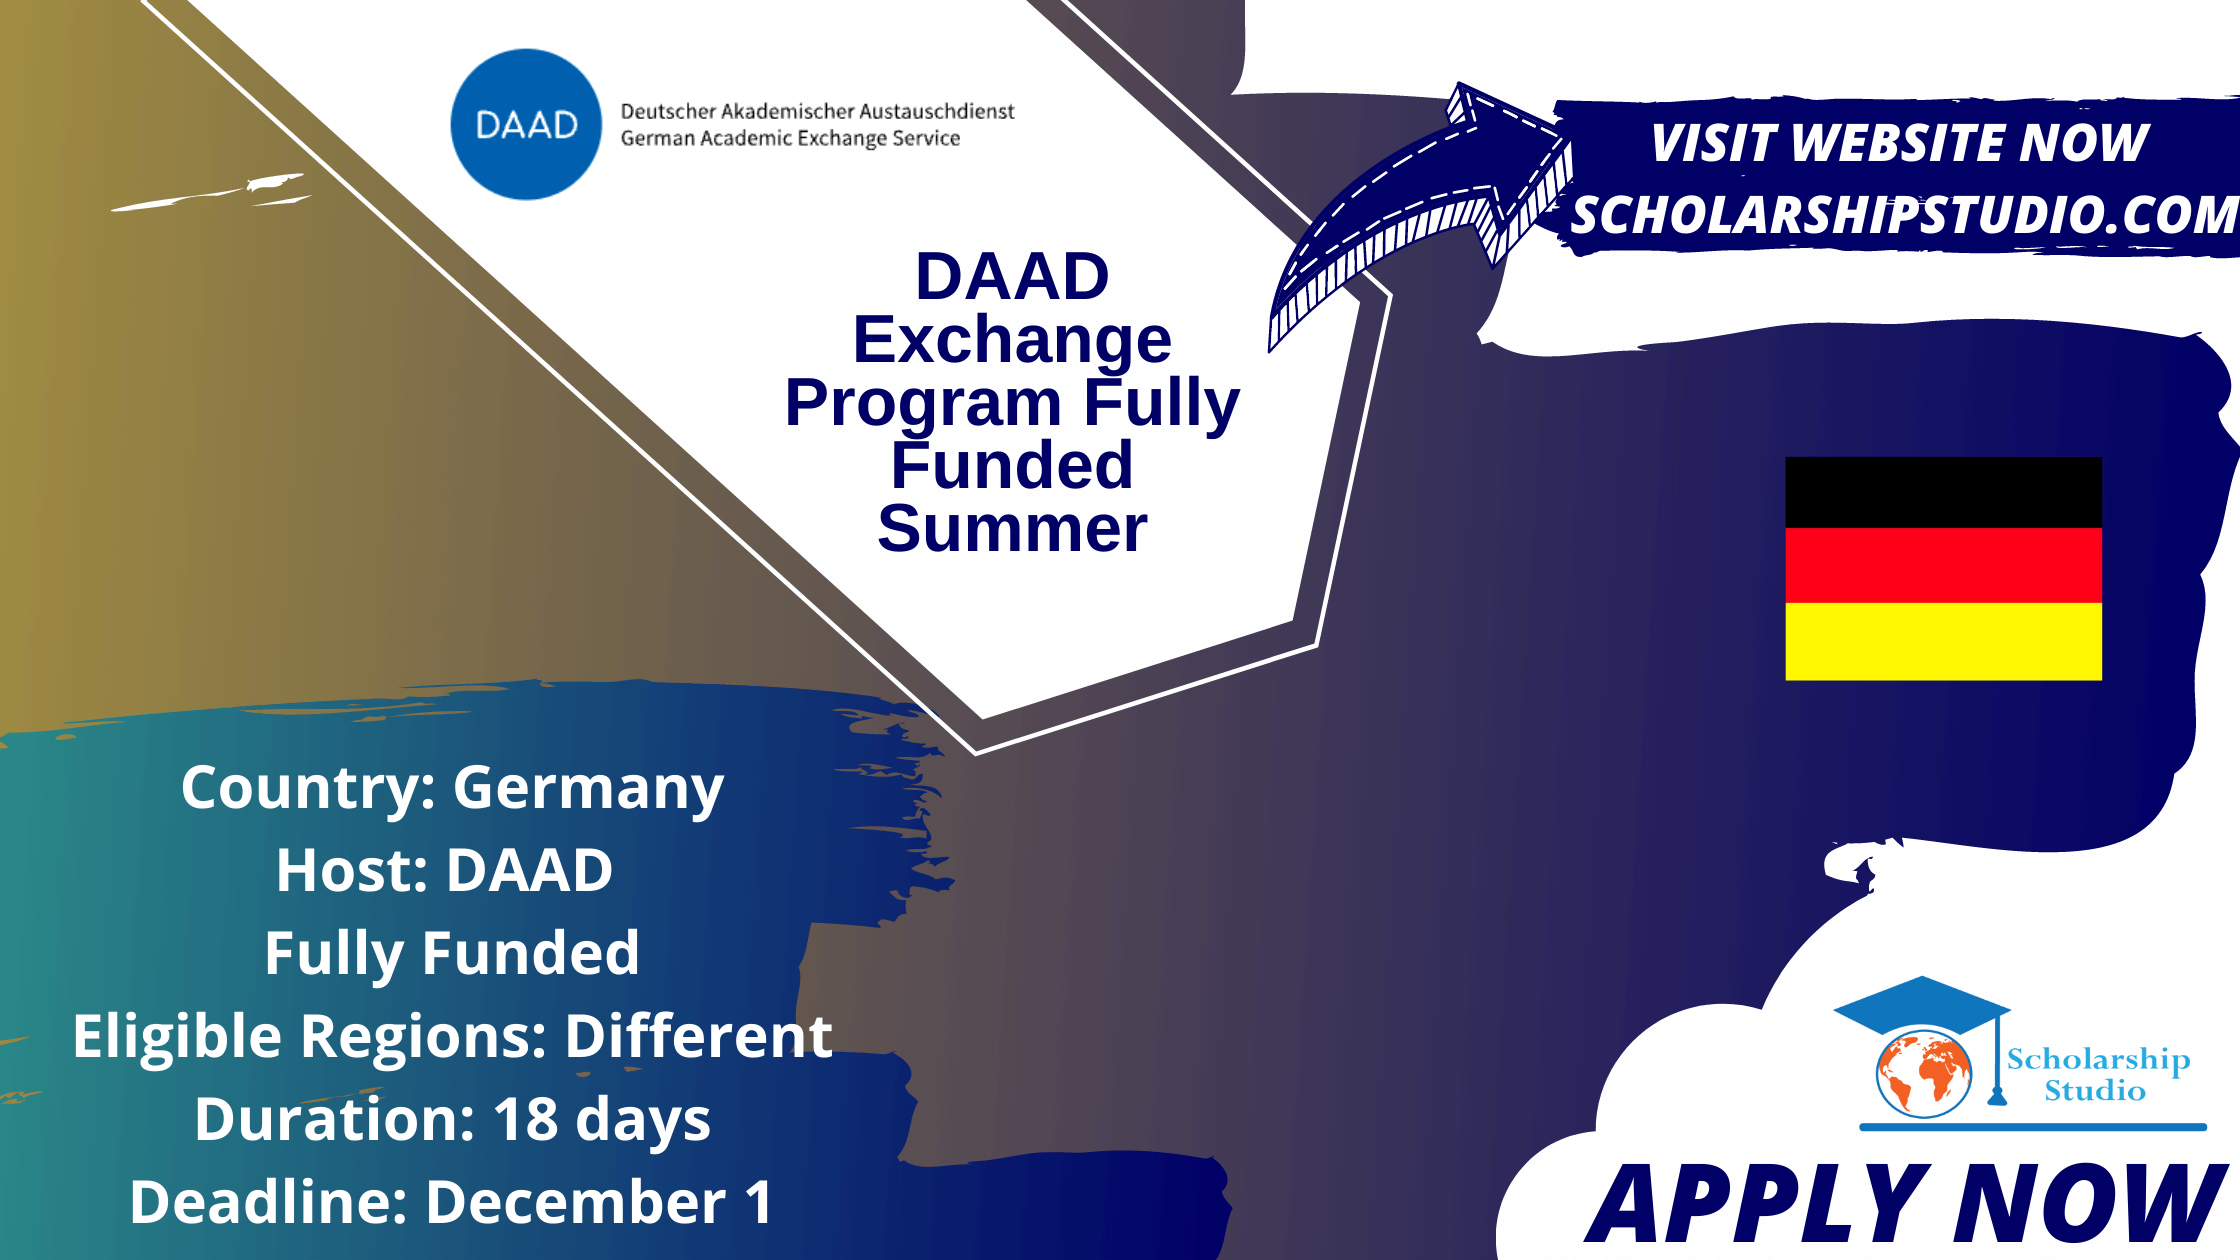 DAAD Exchange Program Fully Funded Summer Scholarship studio